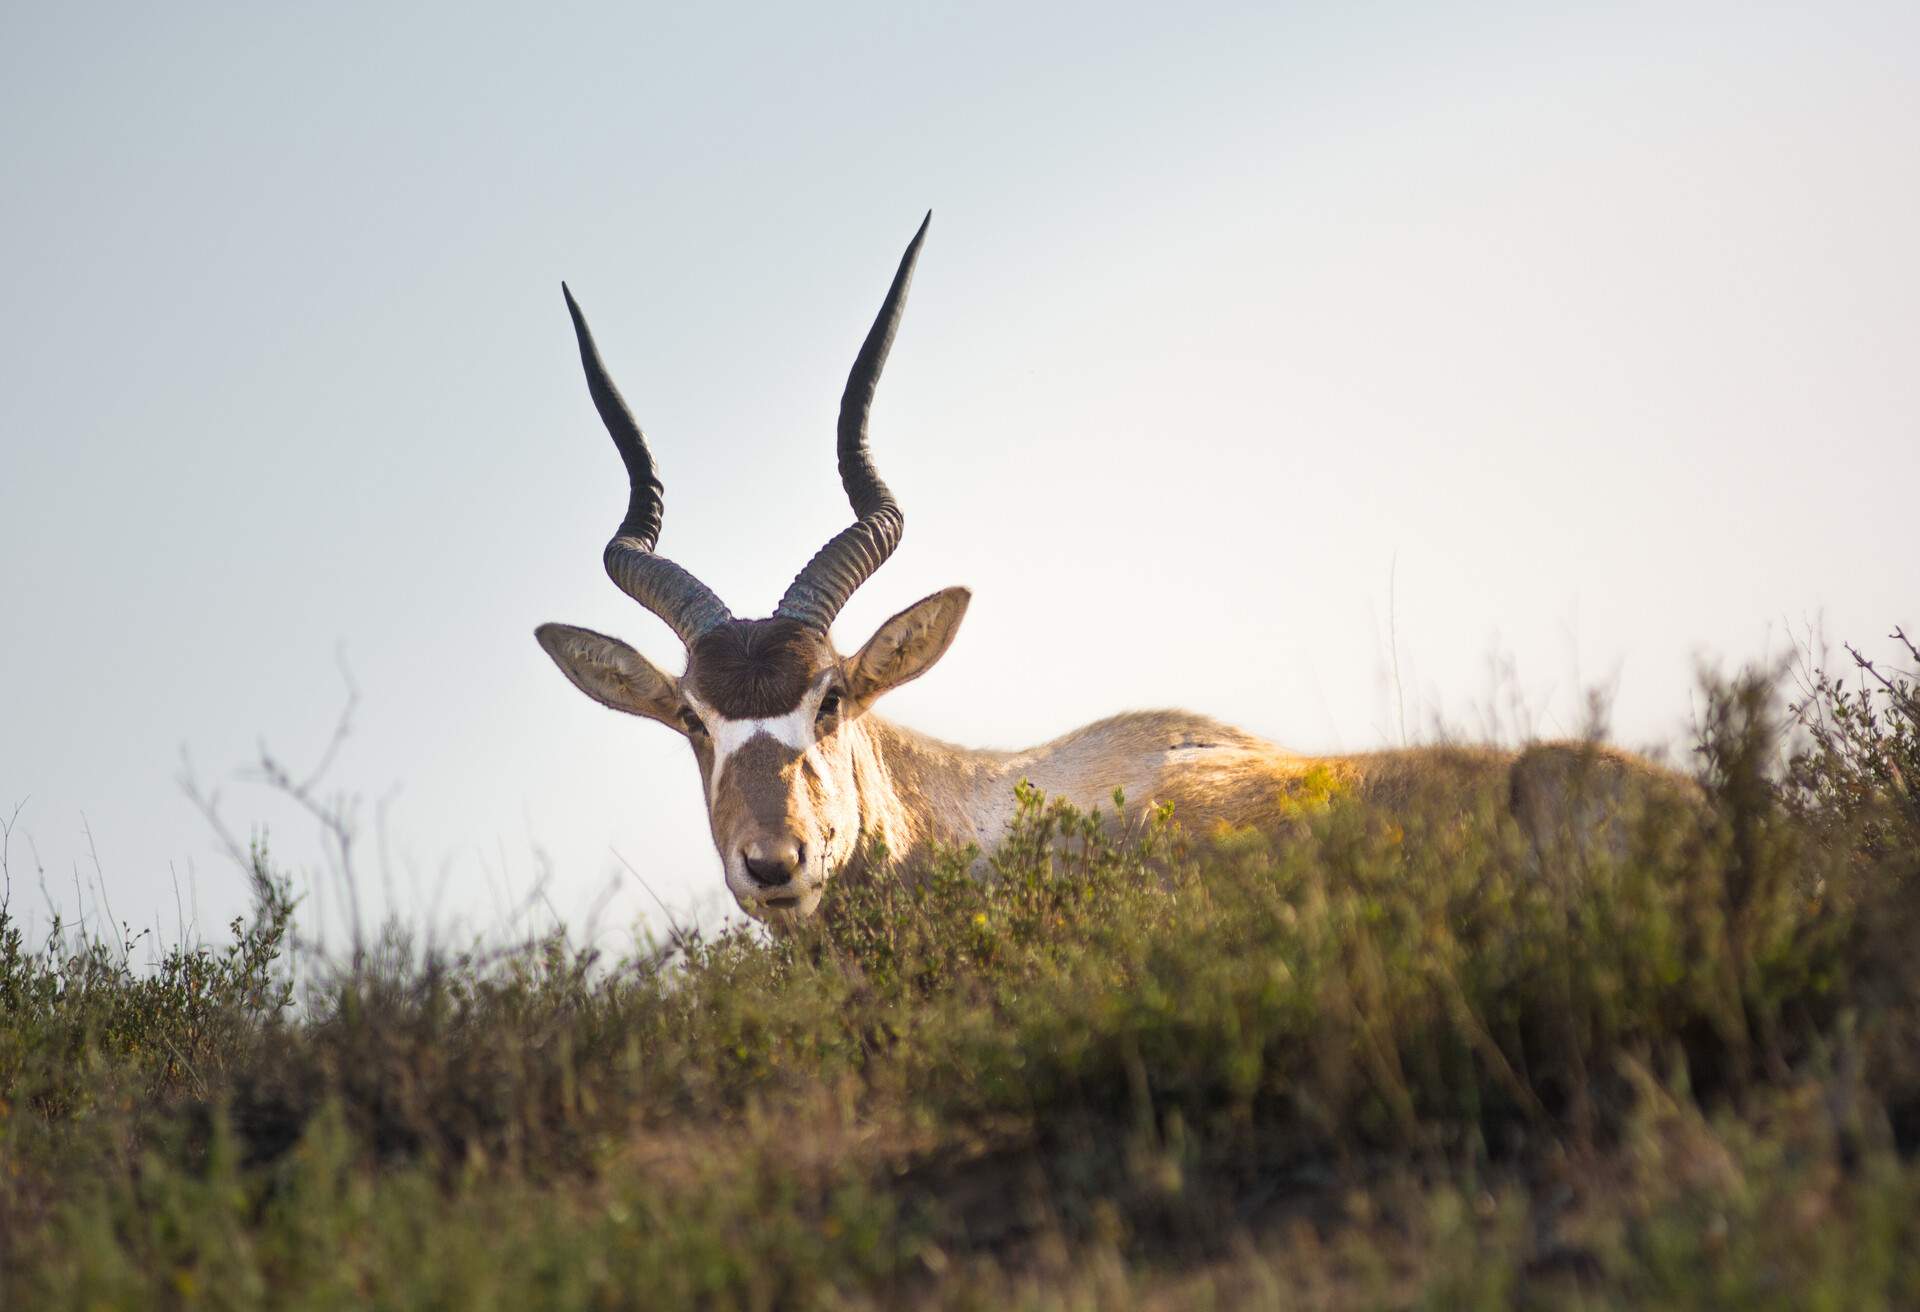 Addax on a grassy field - white or screw horn antelope. Critically endangered species, desert dwelling animal. National Park Souss-Massa, Agadir, Morocco